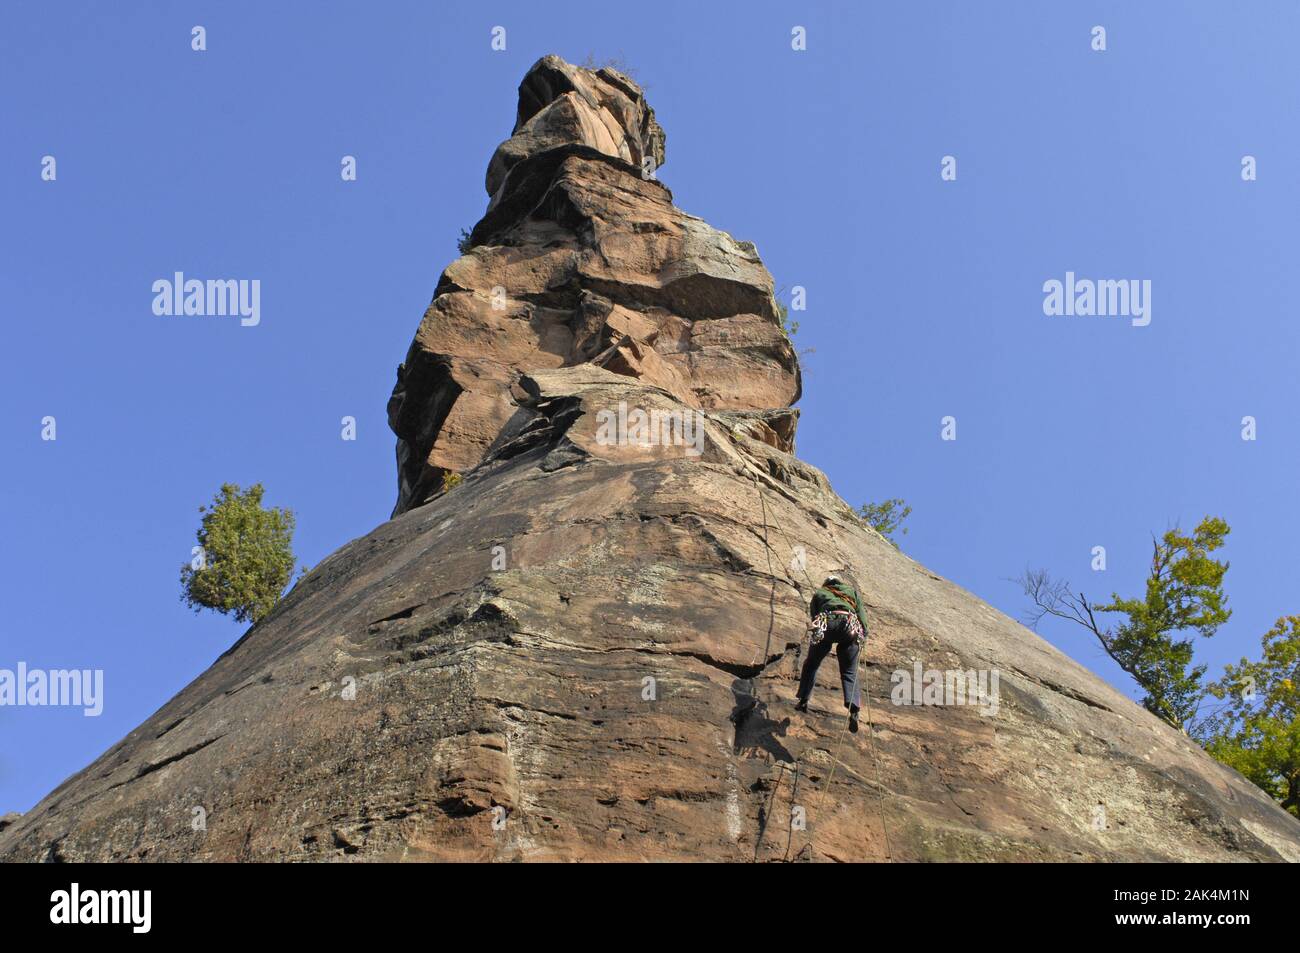 Klettern im Pfälzer Wald, Pfalz, Deutschland | Utilizzo di tutto il mondo Foto Stock